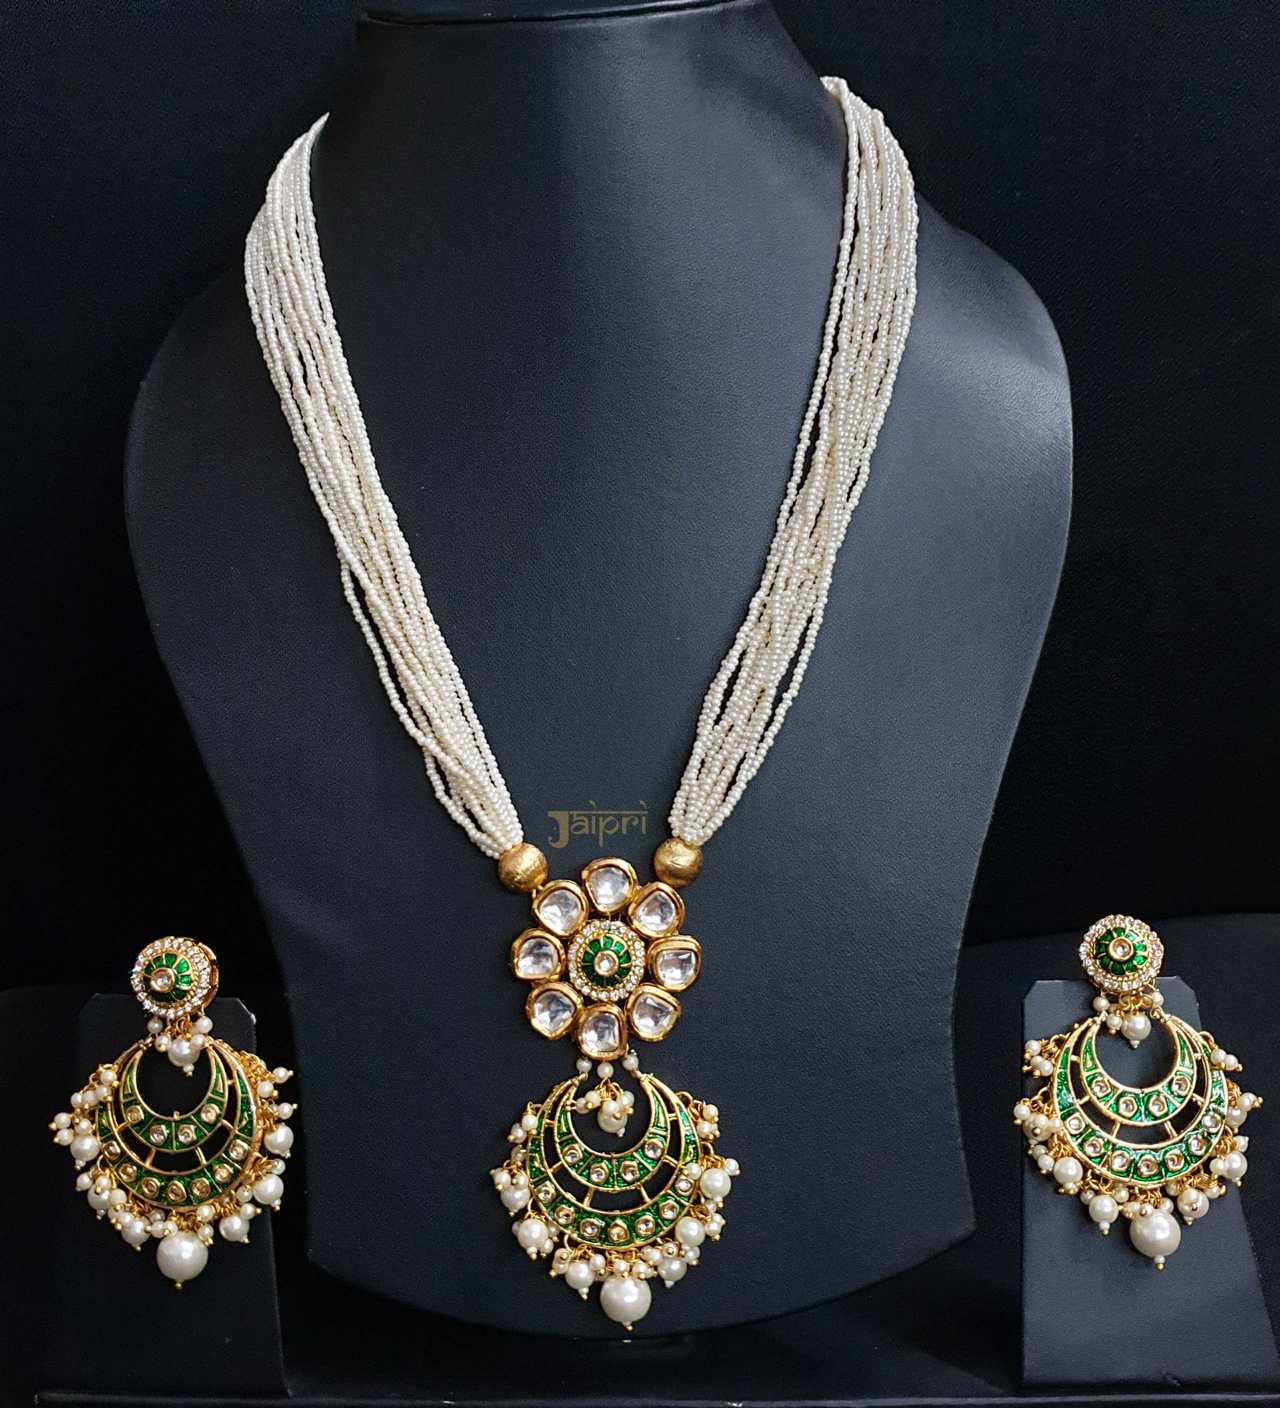 Green Floral Meenakari Pendant With Chand-Bali Earrings